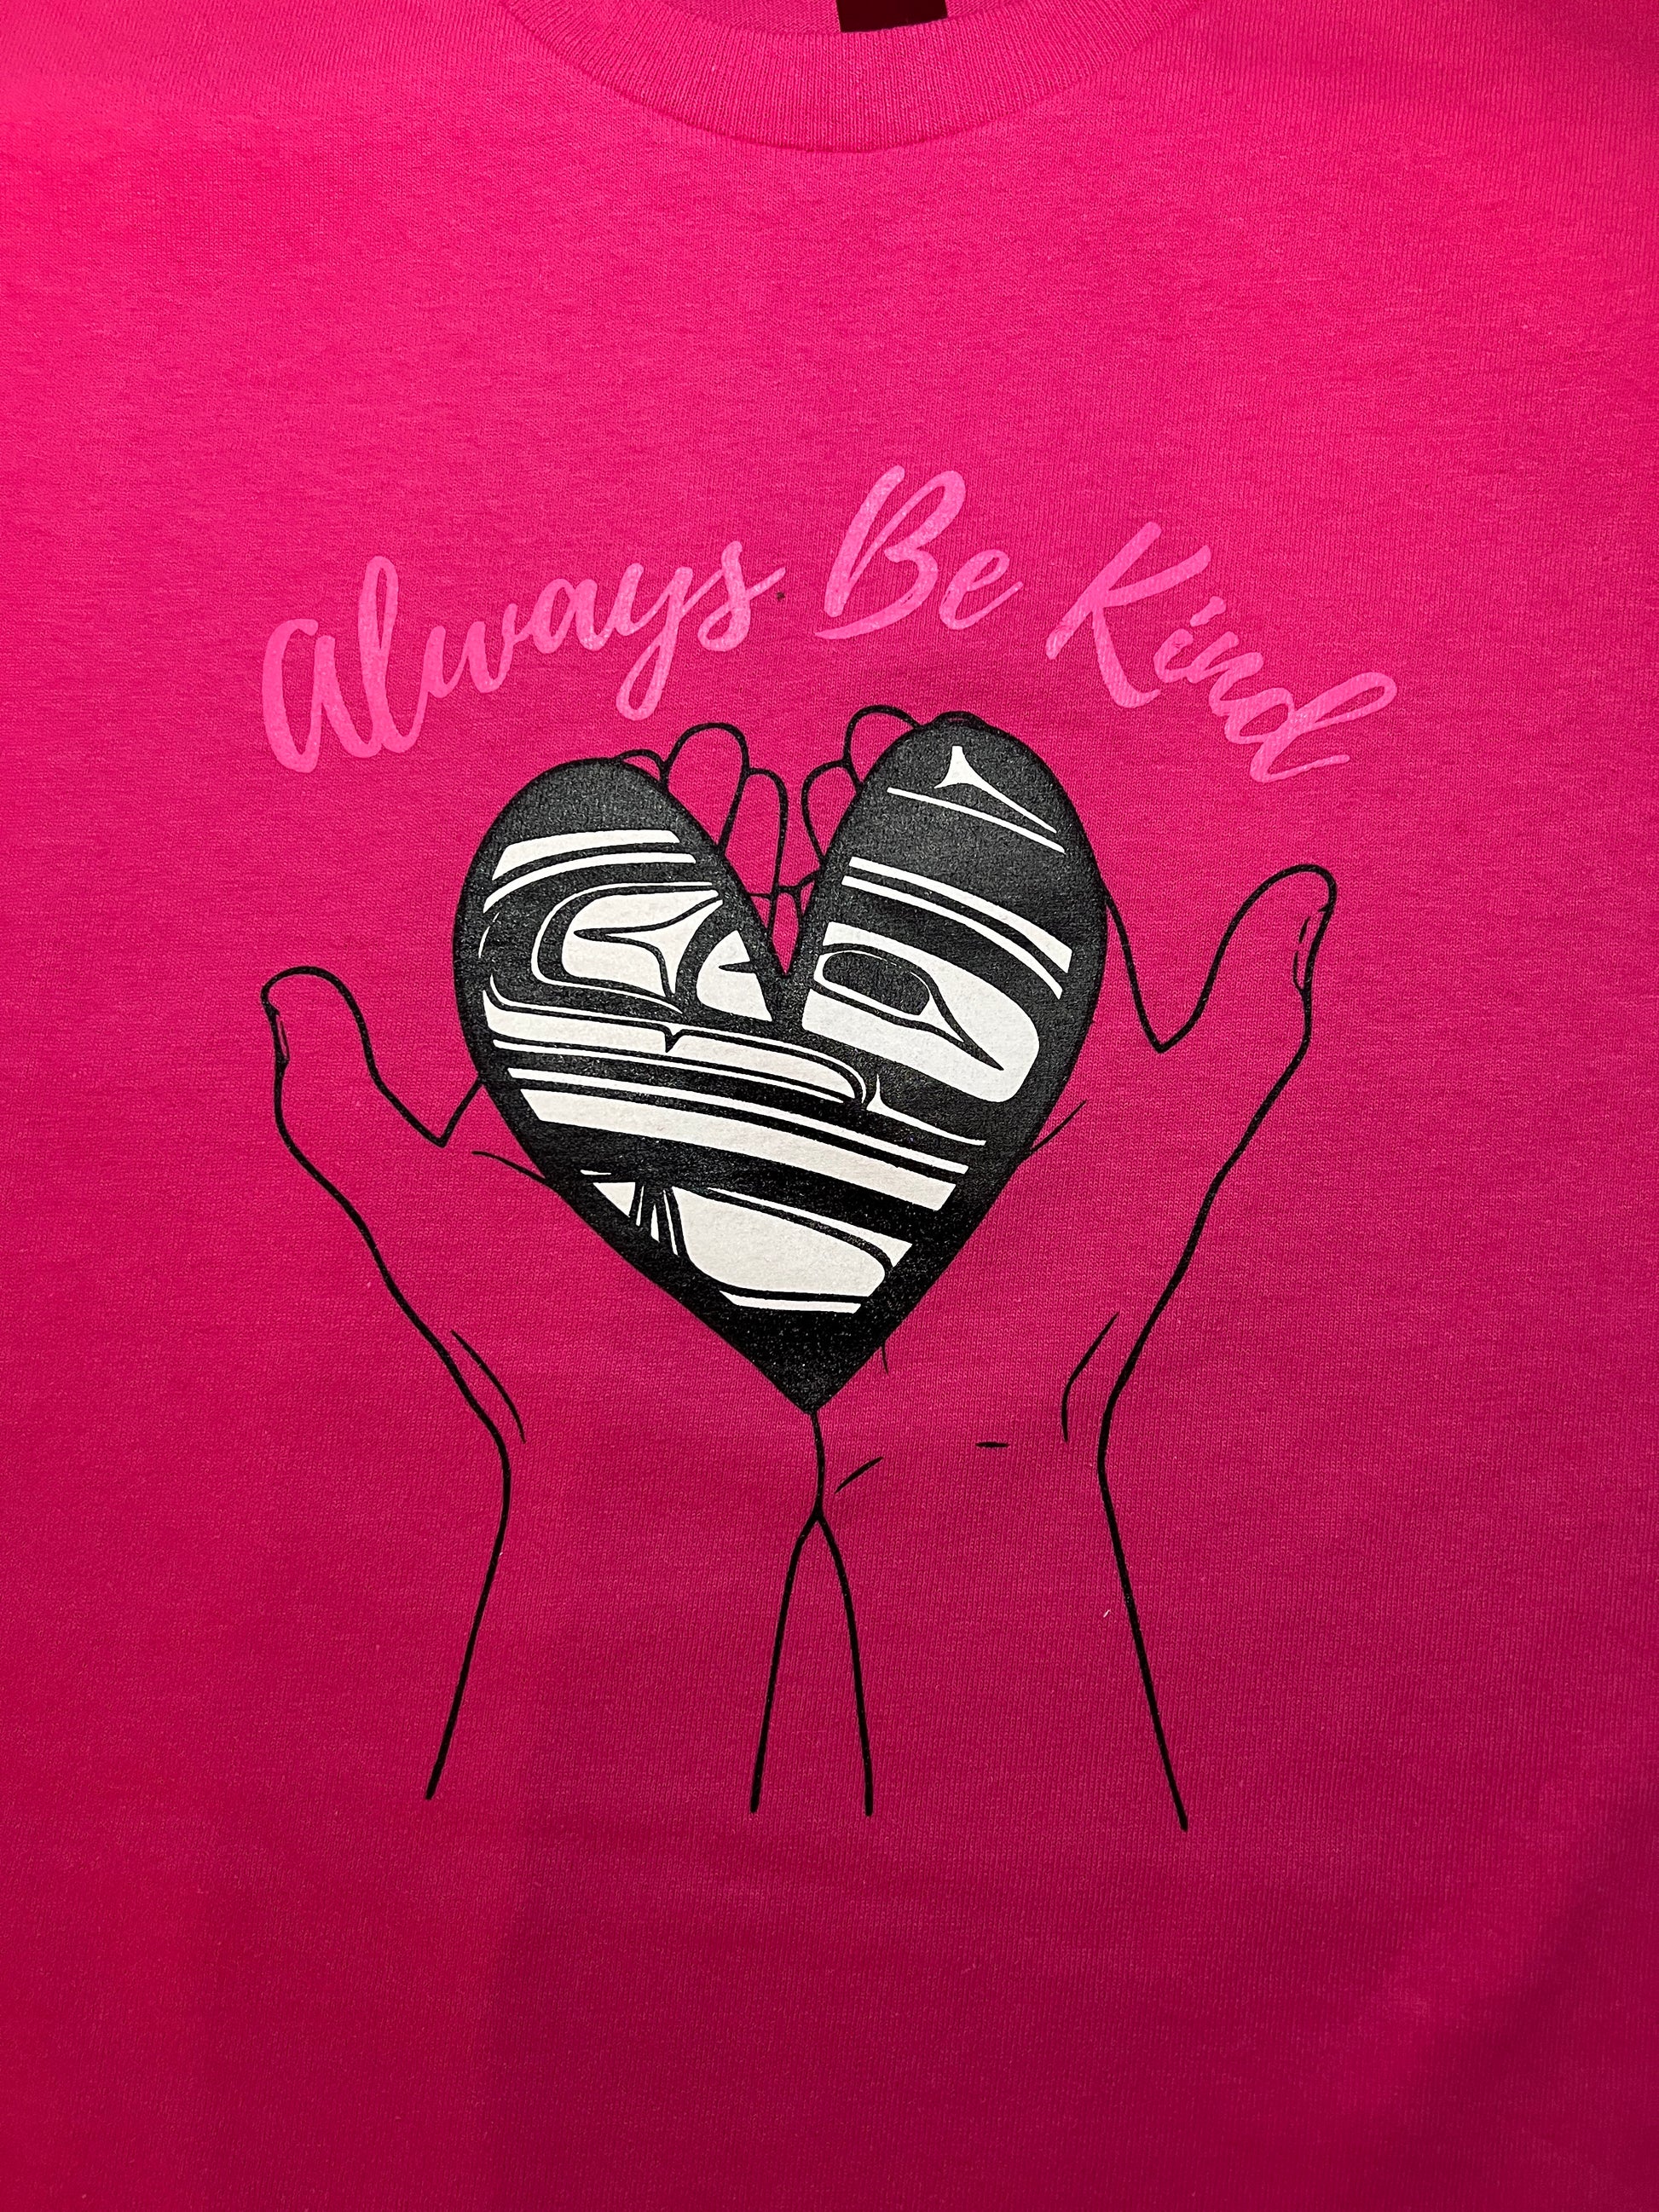 Raven Prints Pink Shirt youth - Premium  from Raven Prints - Just $15! Shop now at Northwest Coast Native Apparel/John P Wilson Haisla